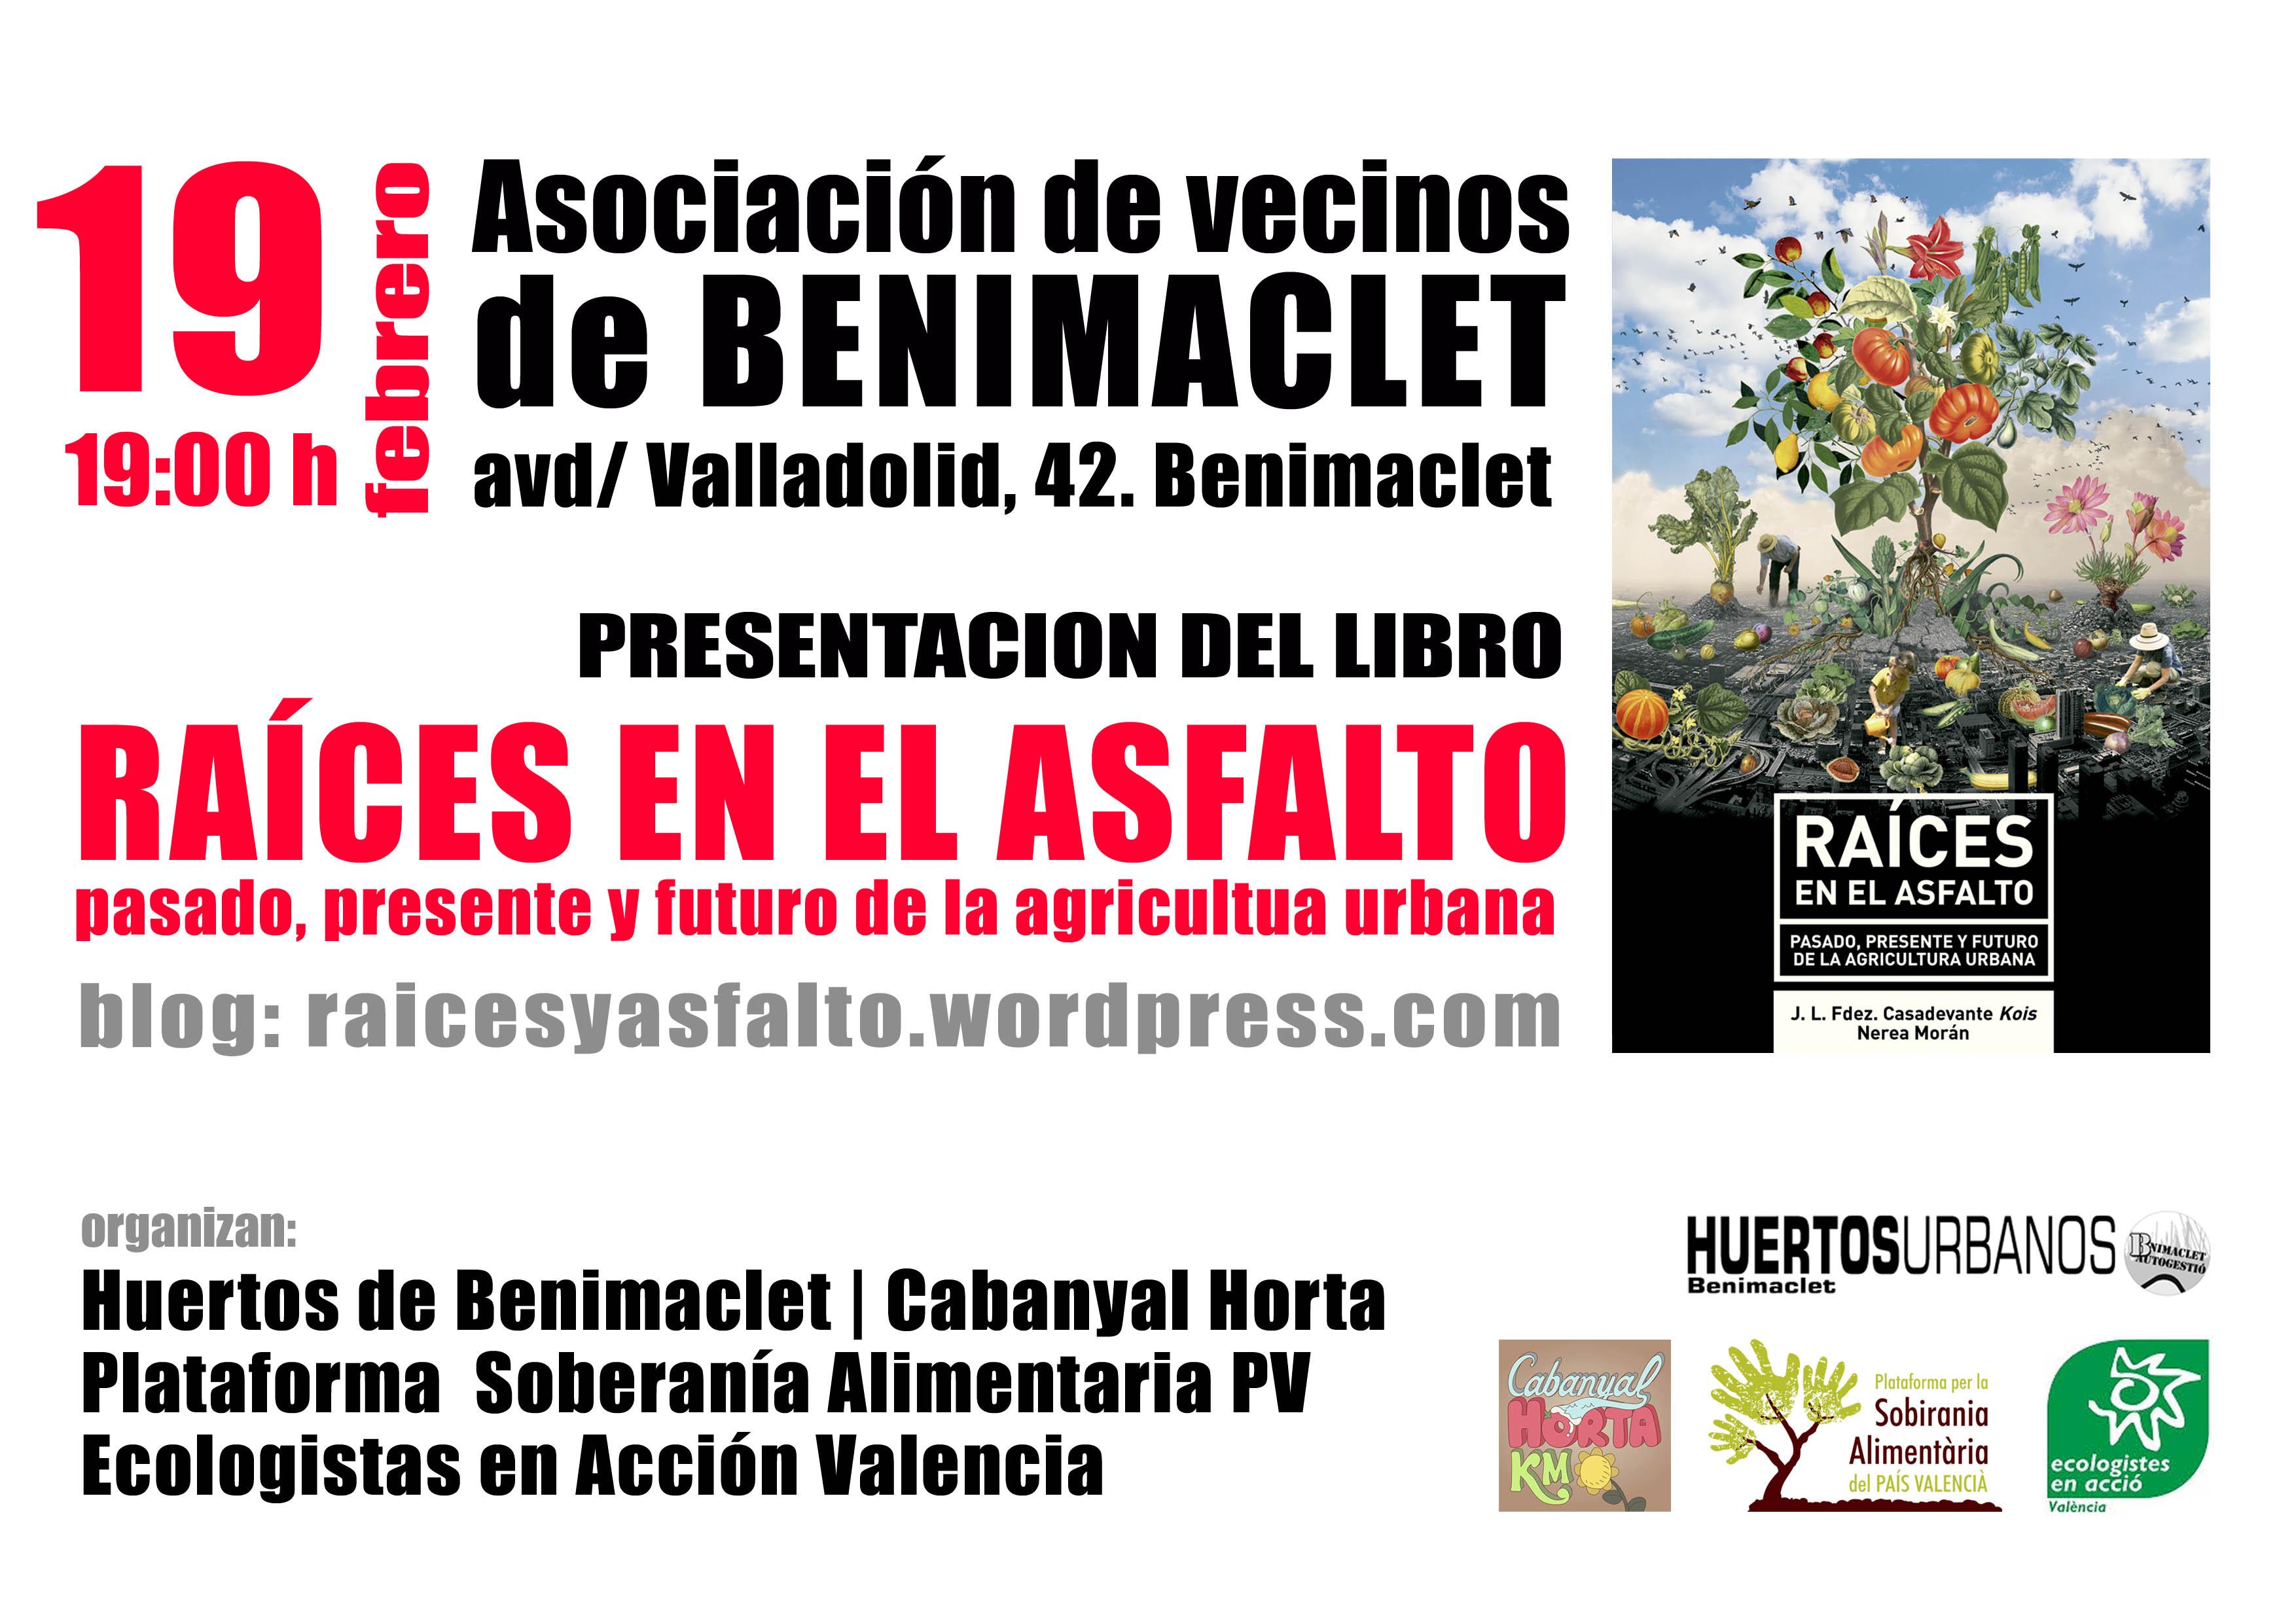 Presentació del llibre "Raices en el Asfalto" de Jose Luis Fernandez Casadevante “Kois” i Nerea Morán.